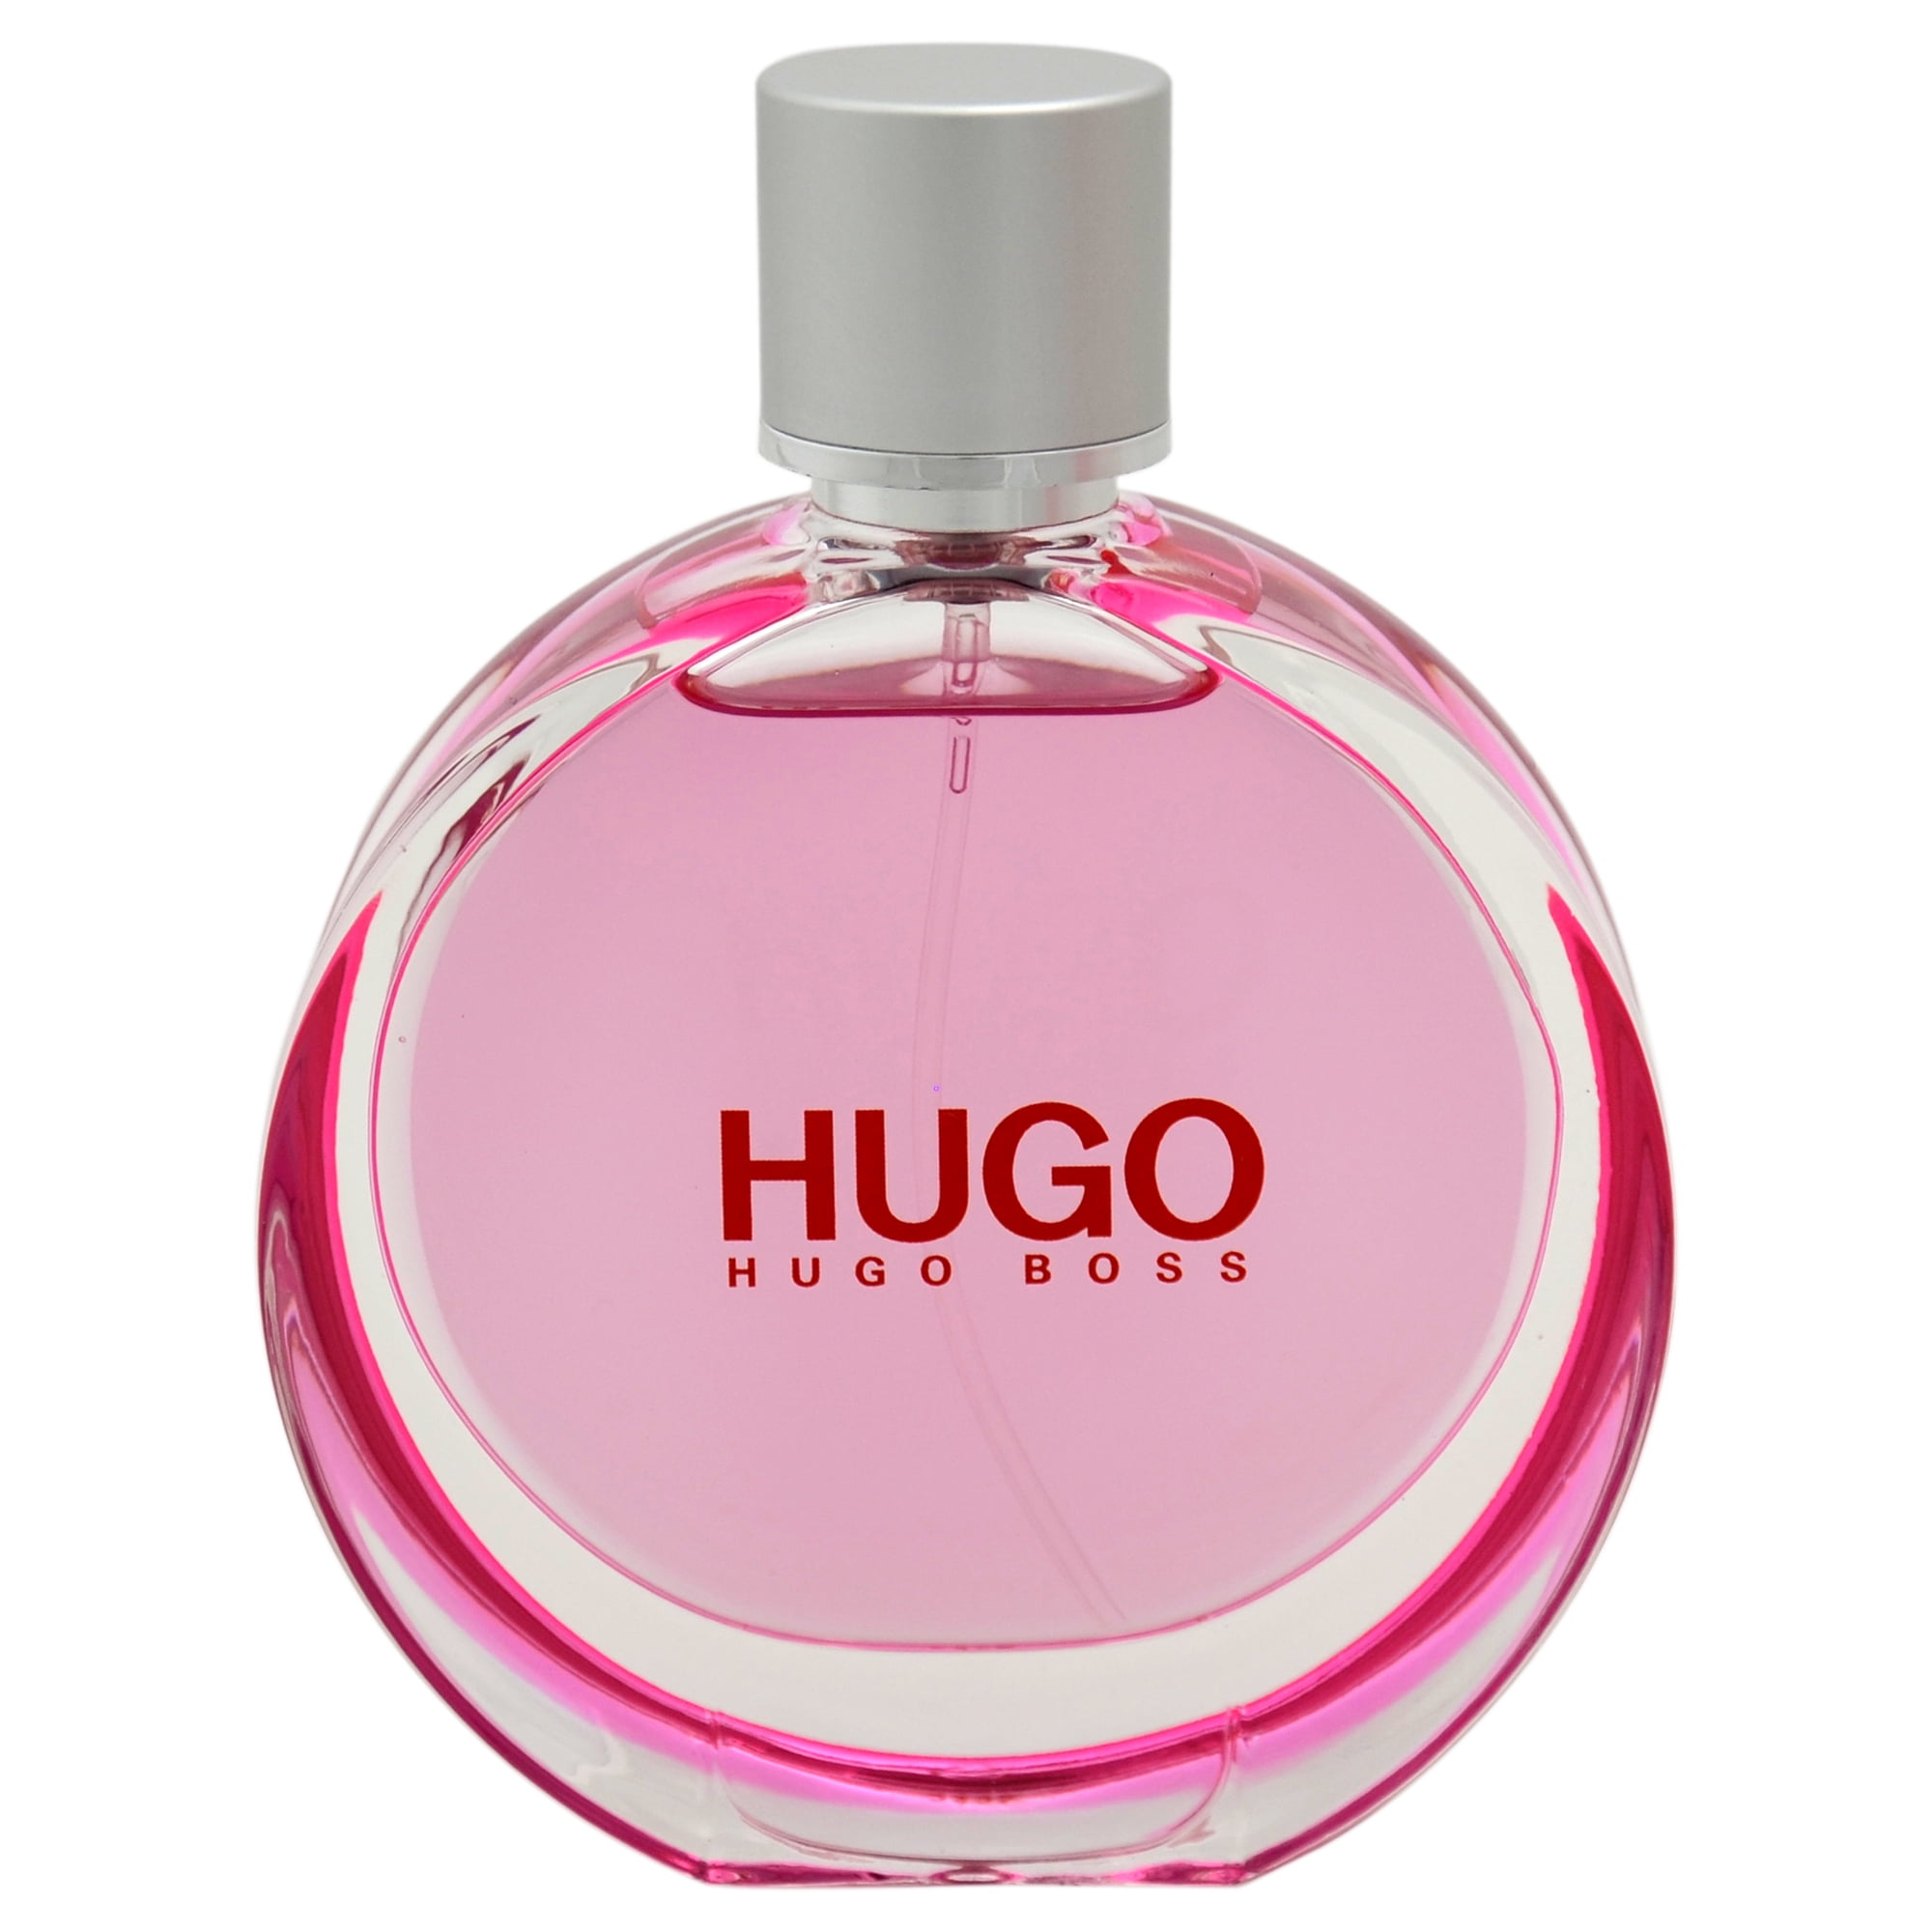 — Hugo Extreme Woman Perfume